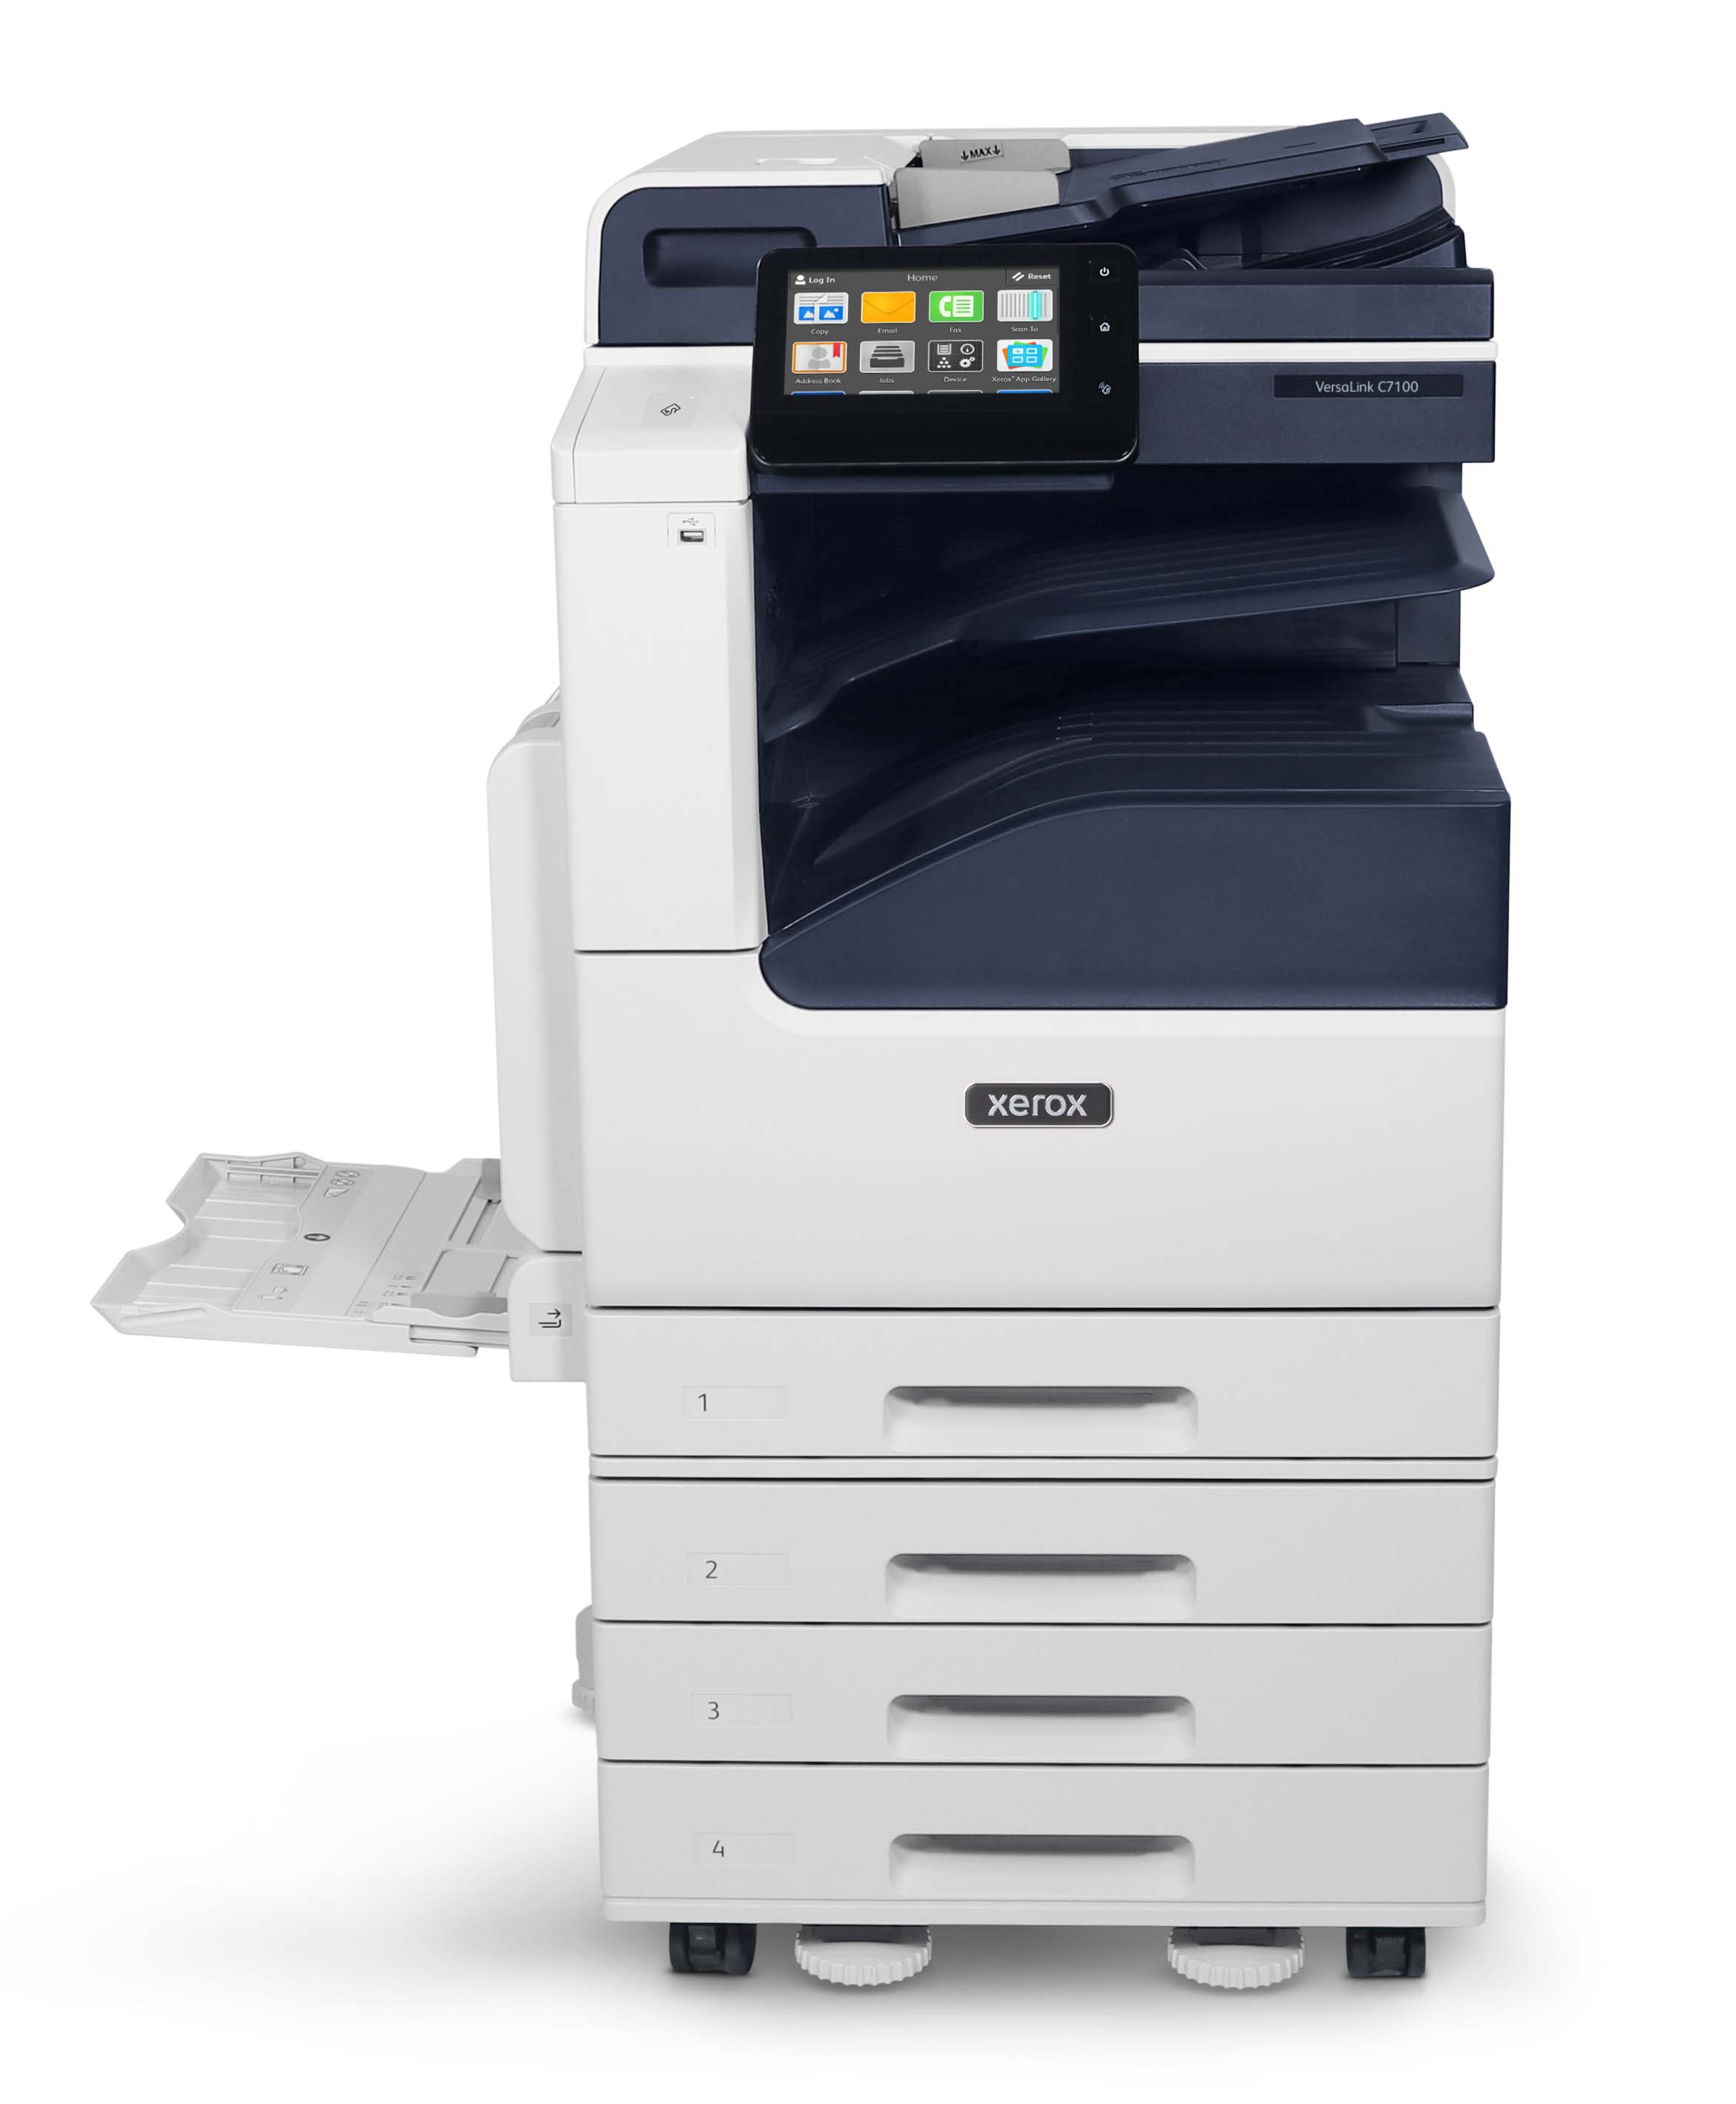 New Xerox VersaLink C7120 Colour MultiFunction Printer - Four trays